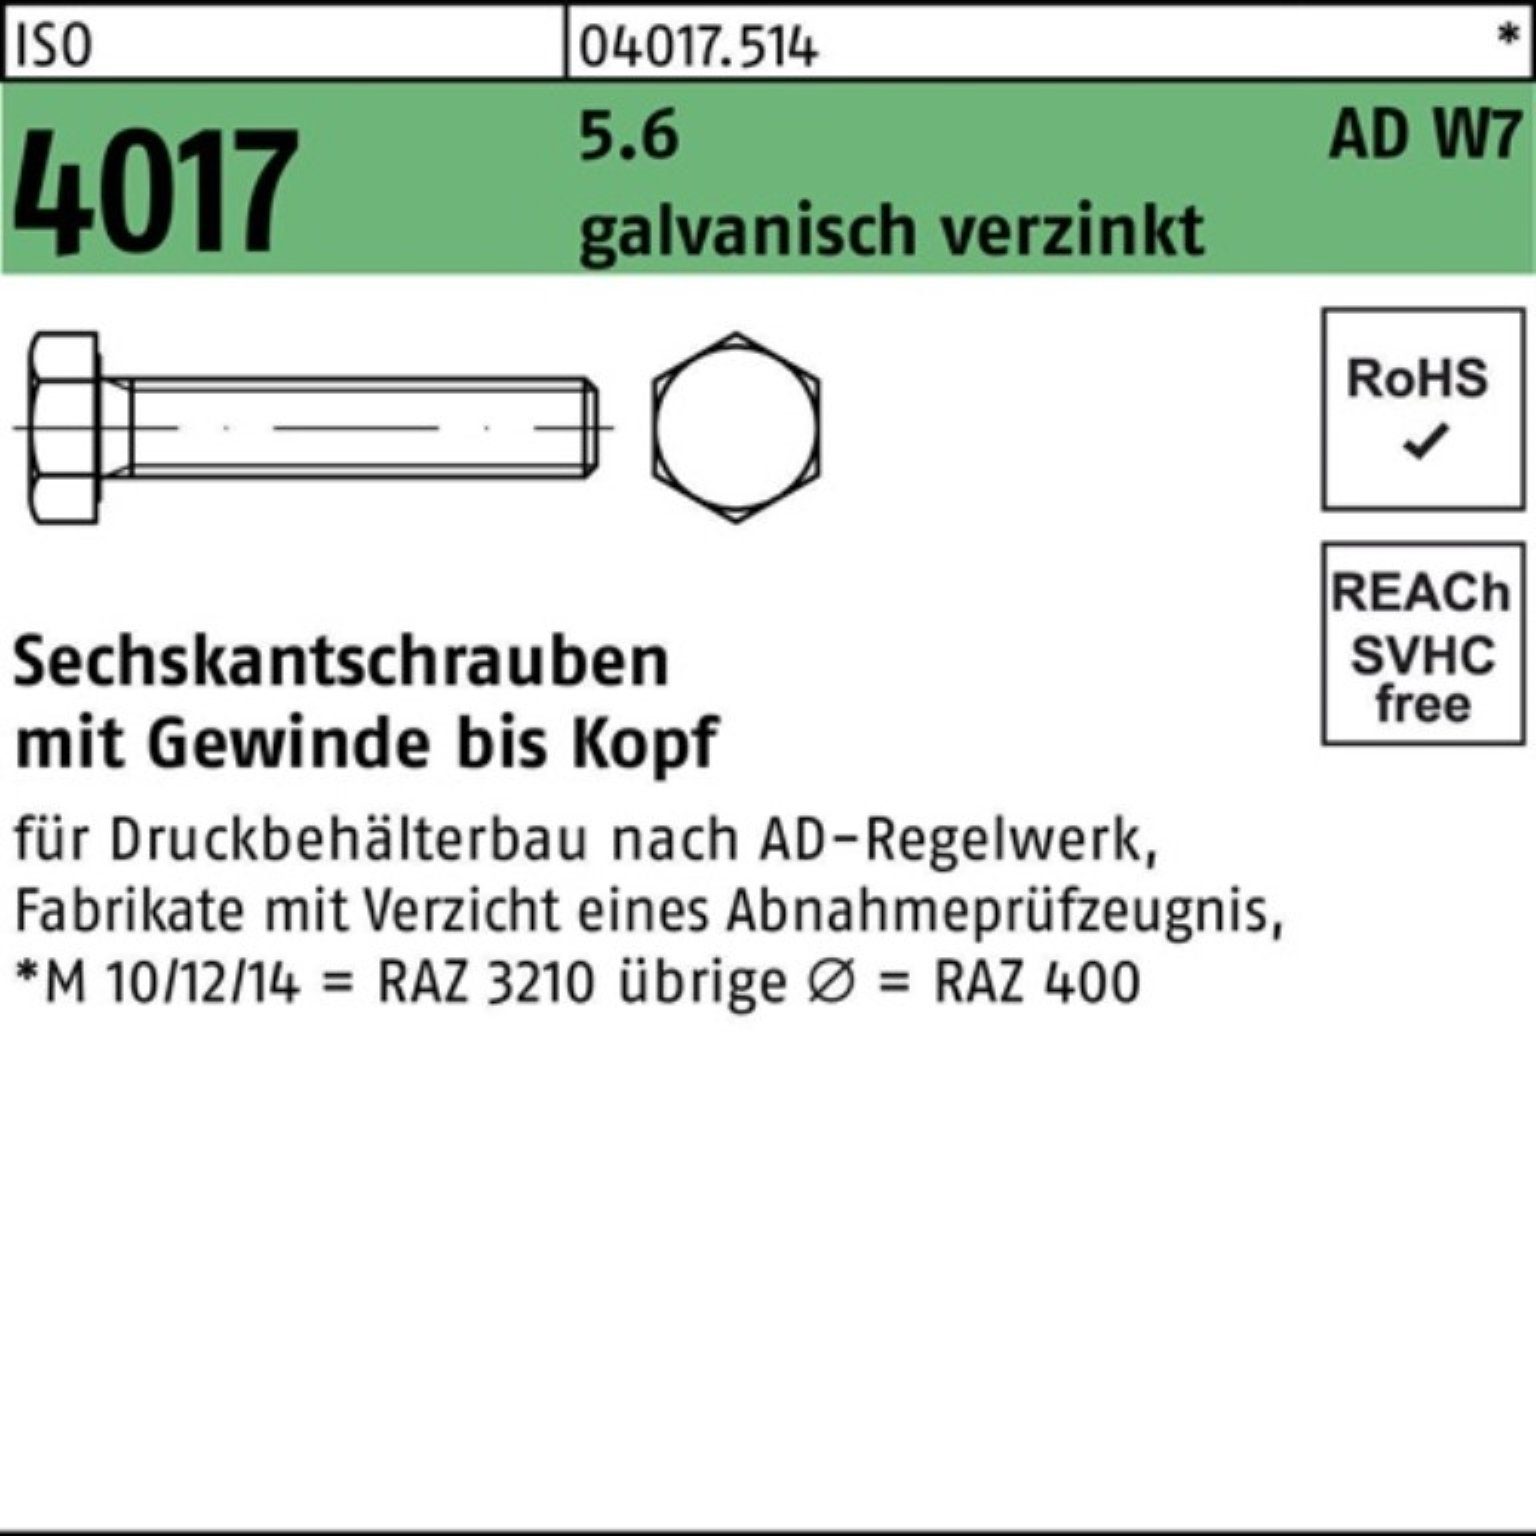 Sechskantschraube M8x 200er W7 Bufab AD 2 20 galv.verz. Sechskantschraube 4017 ISO VG Pack 5.6